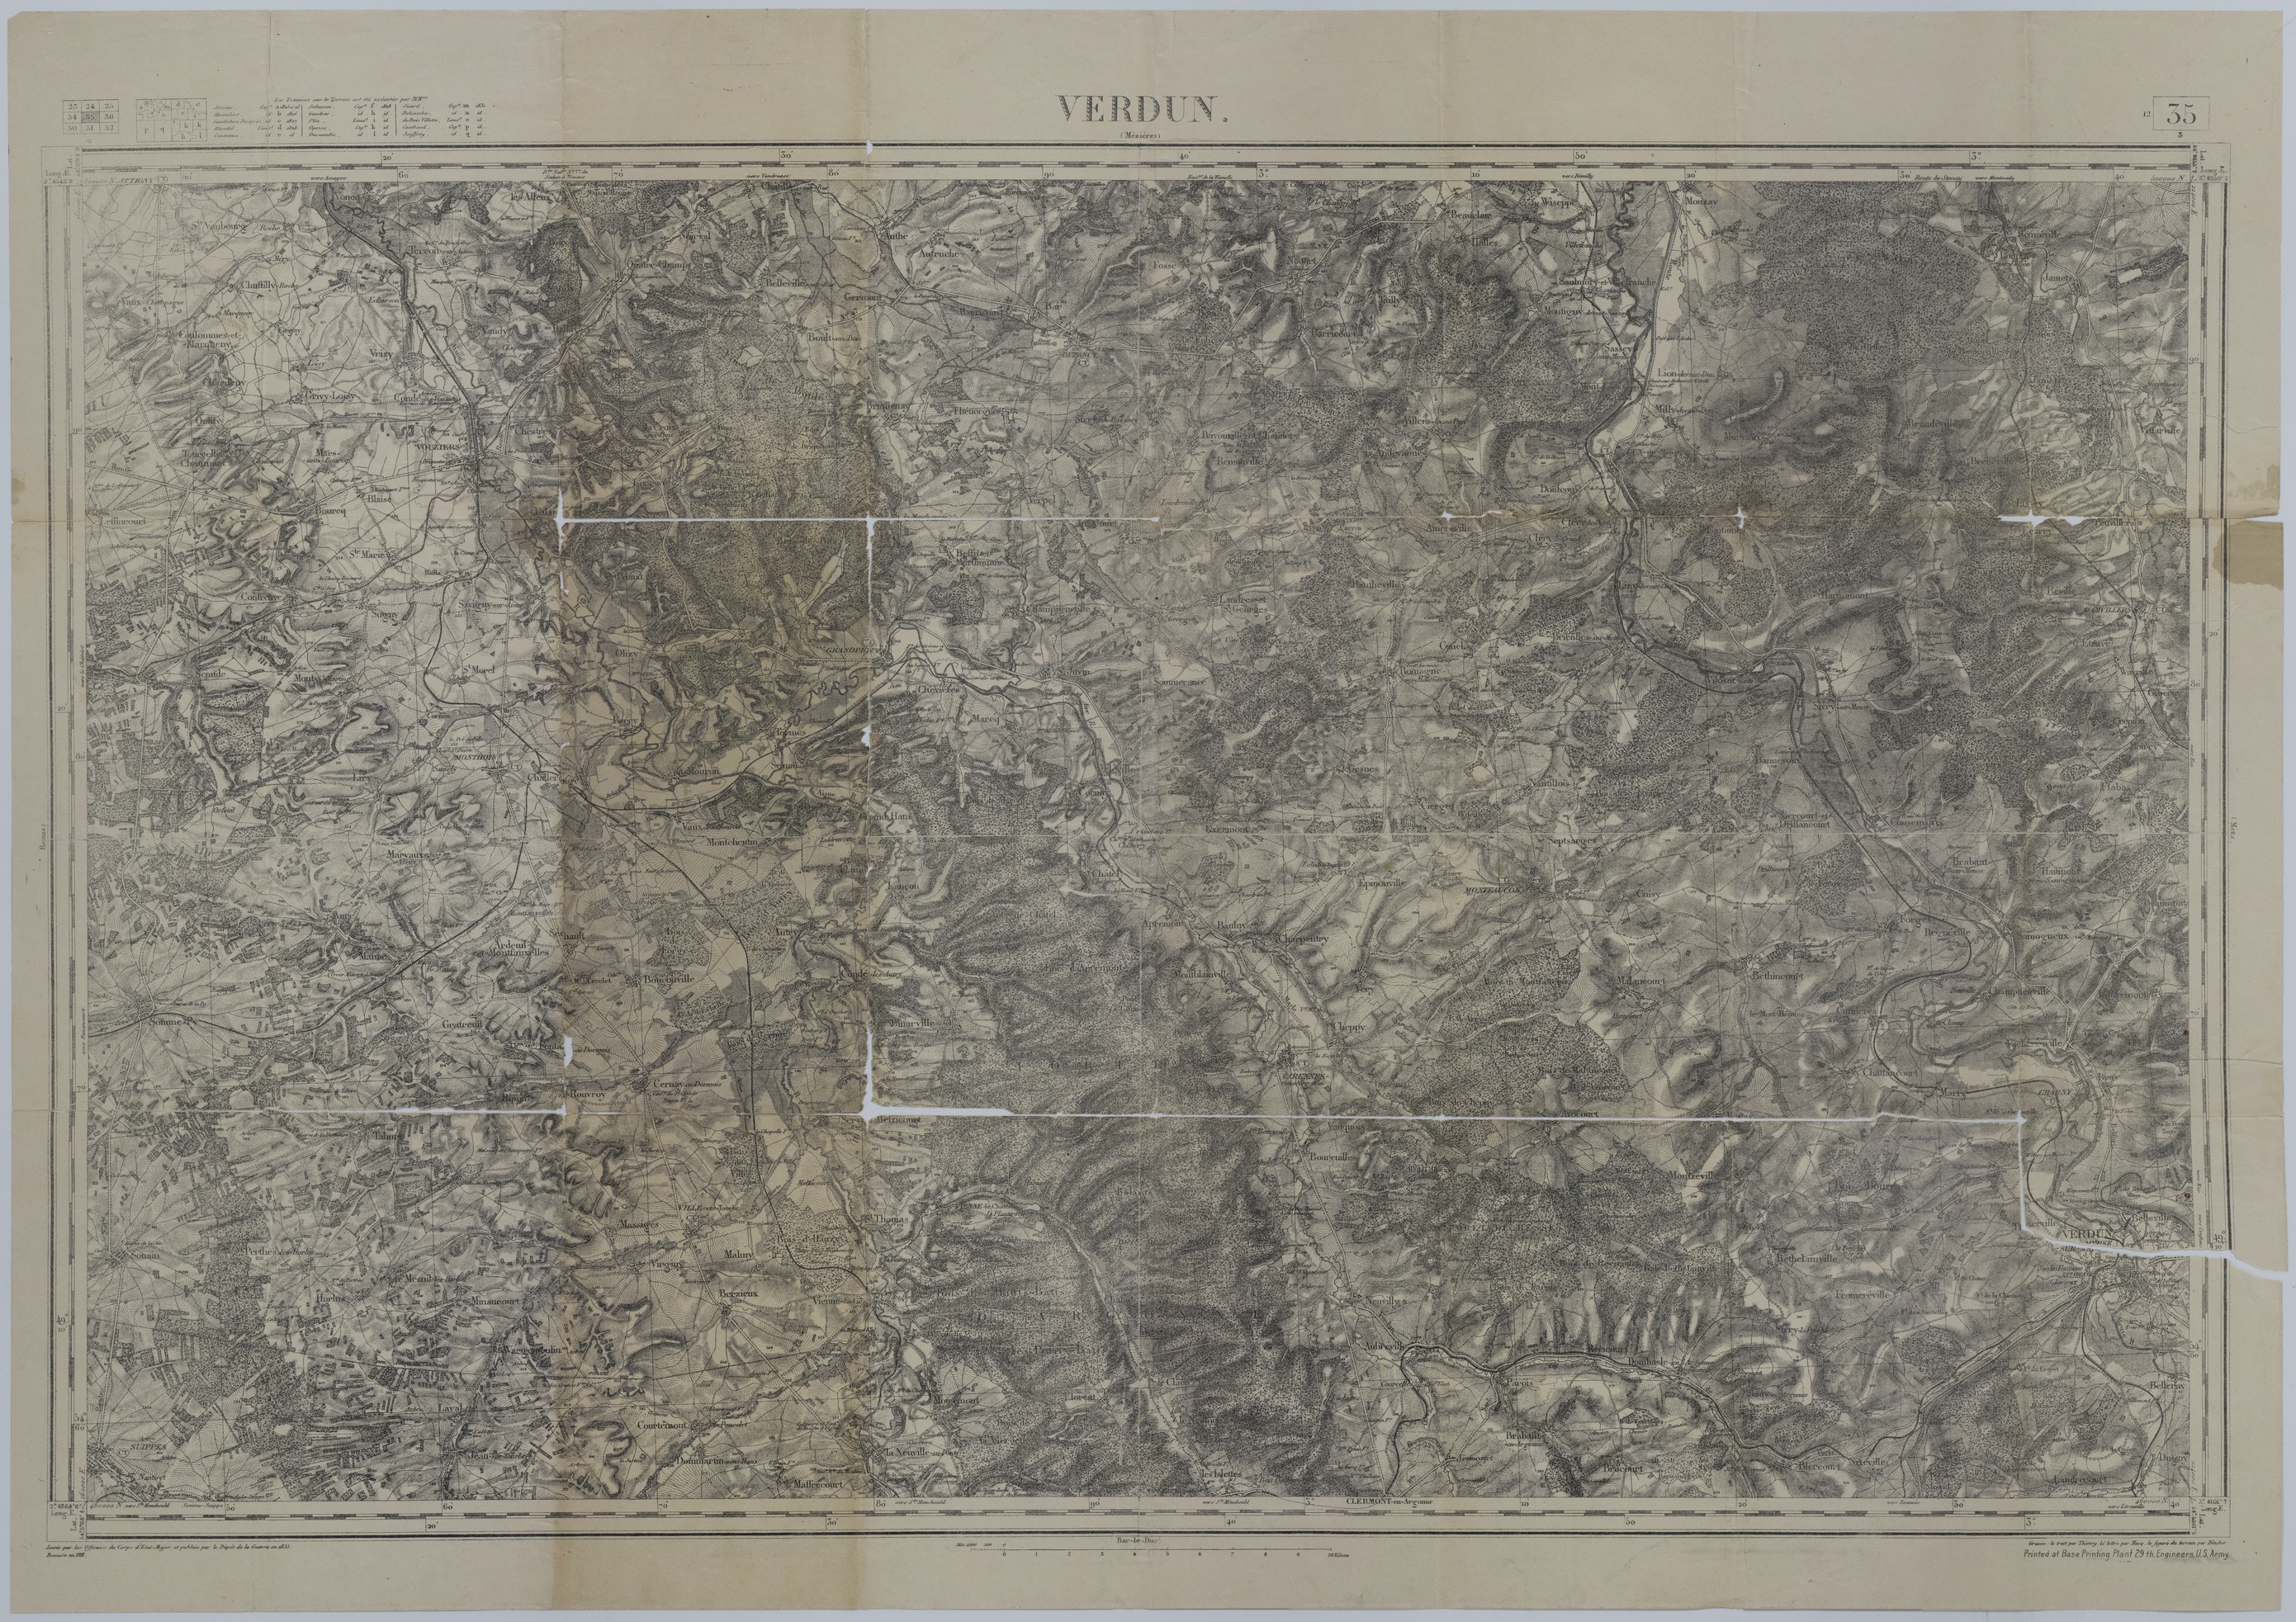 Map of the Area Near Verdun